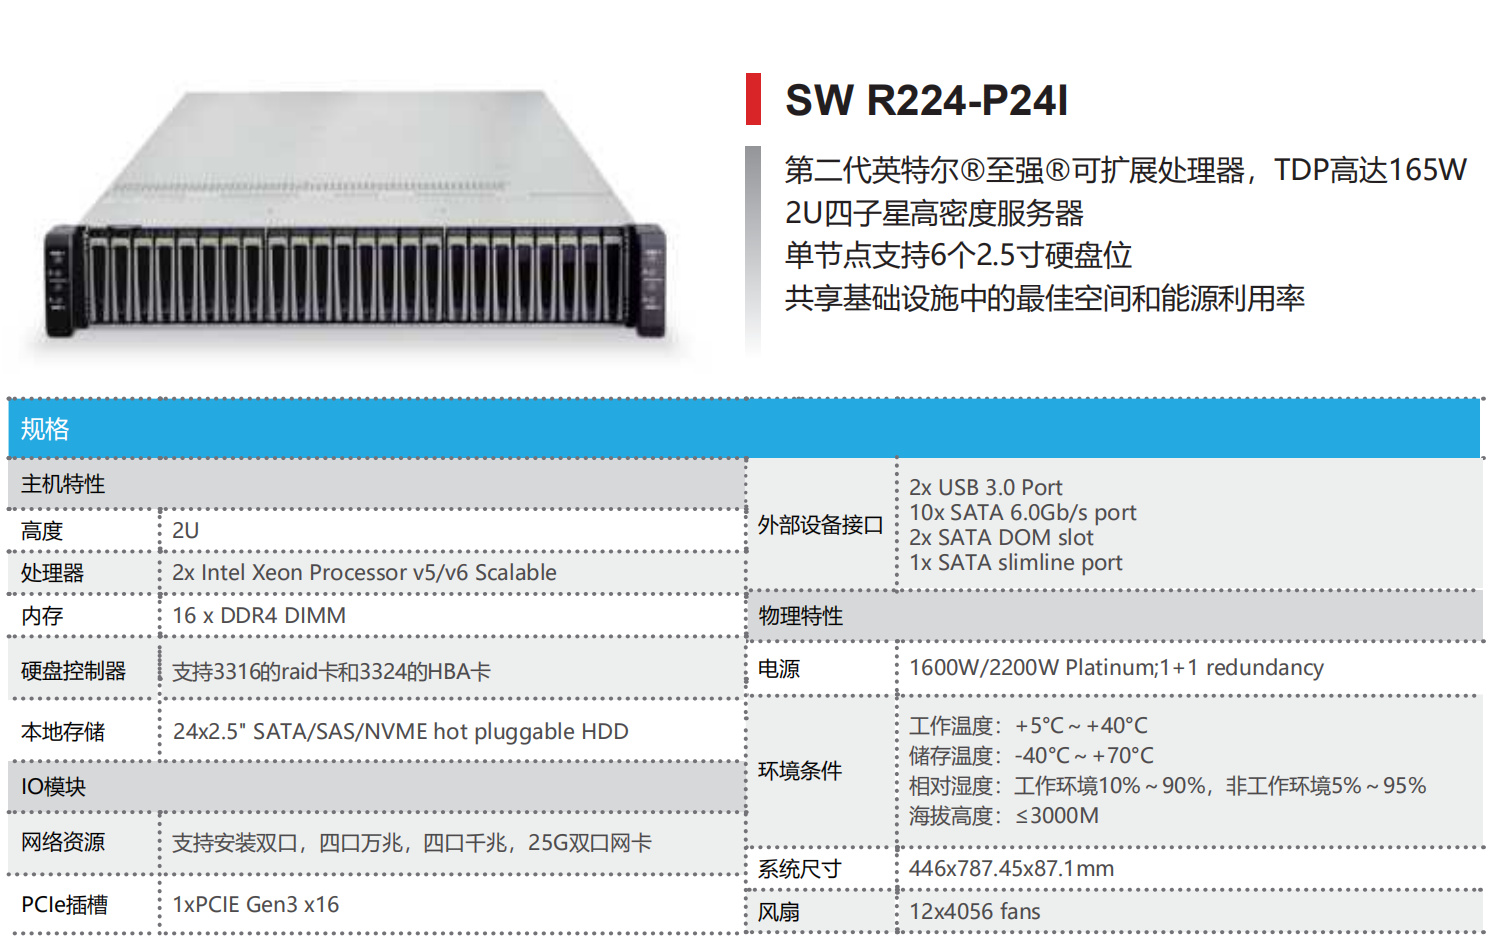 INTEL 平台高密度服务器—SW R224-P24I(图1)